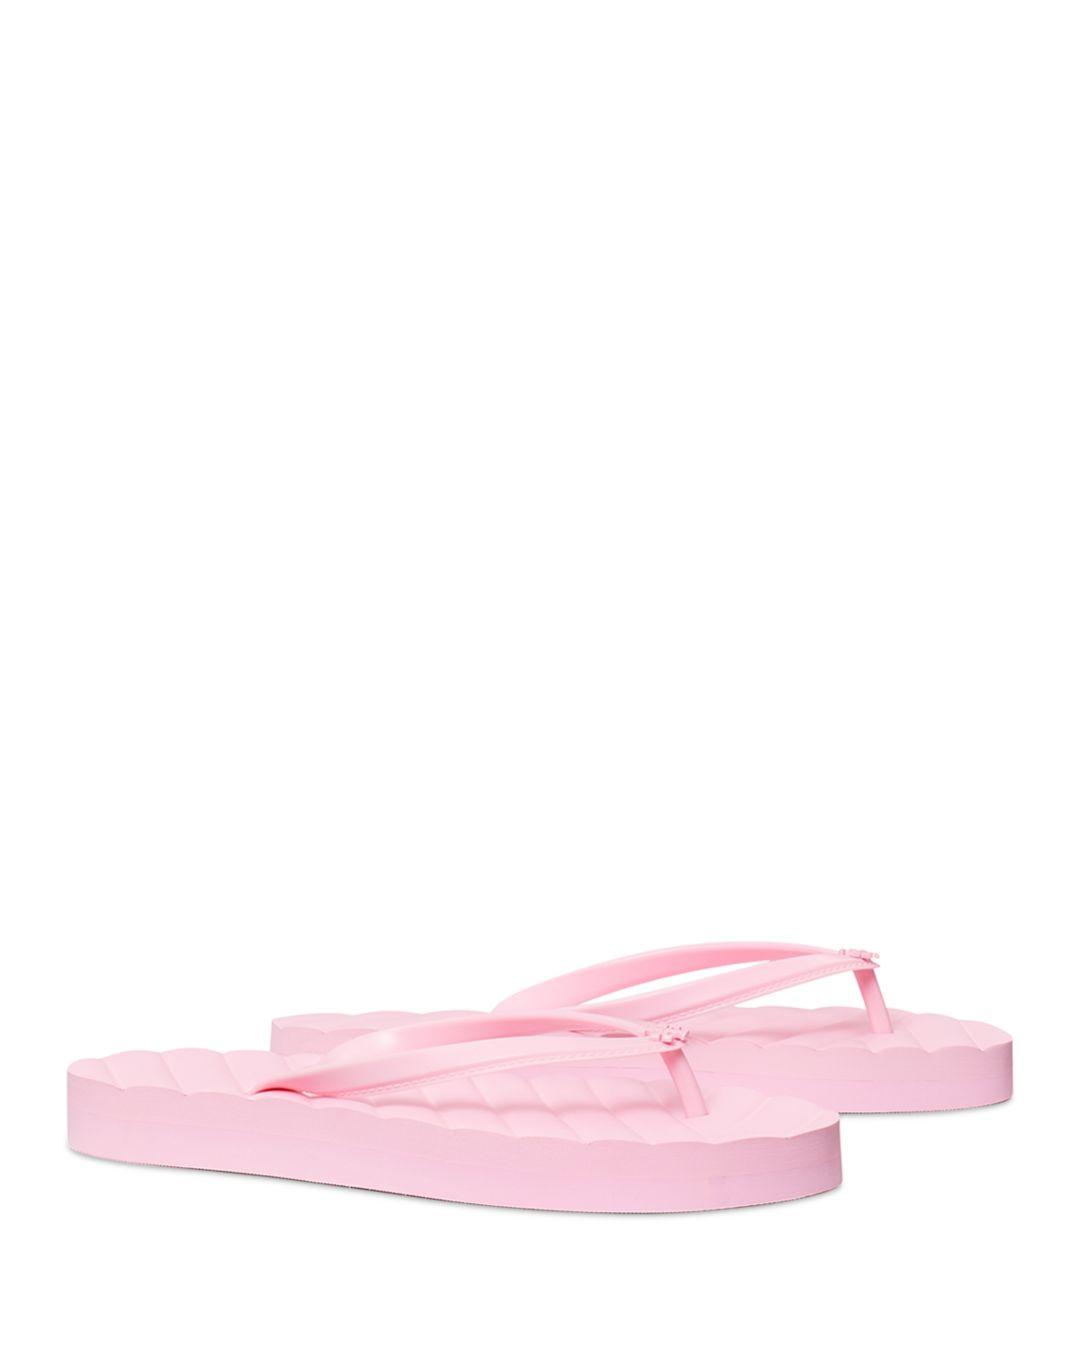 Tory Burch Kira Flip Flop Sandals in Pink | Lyst